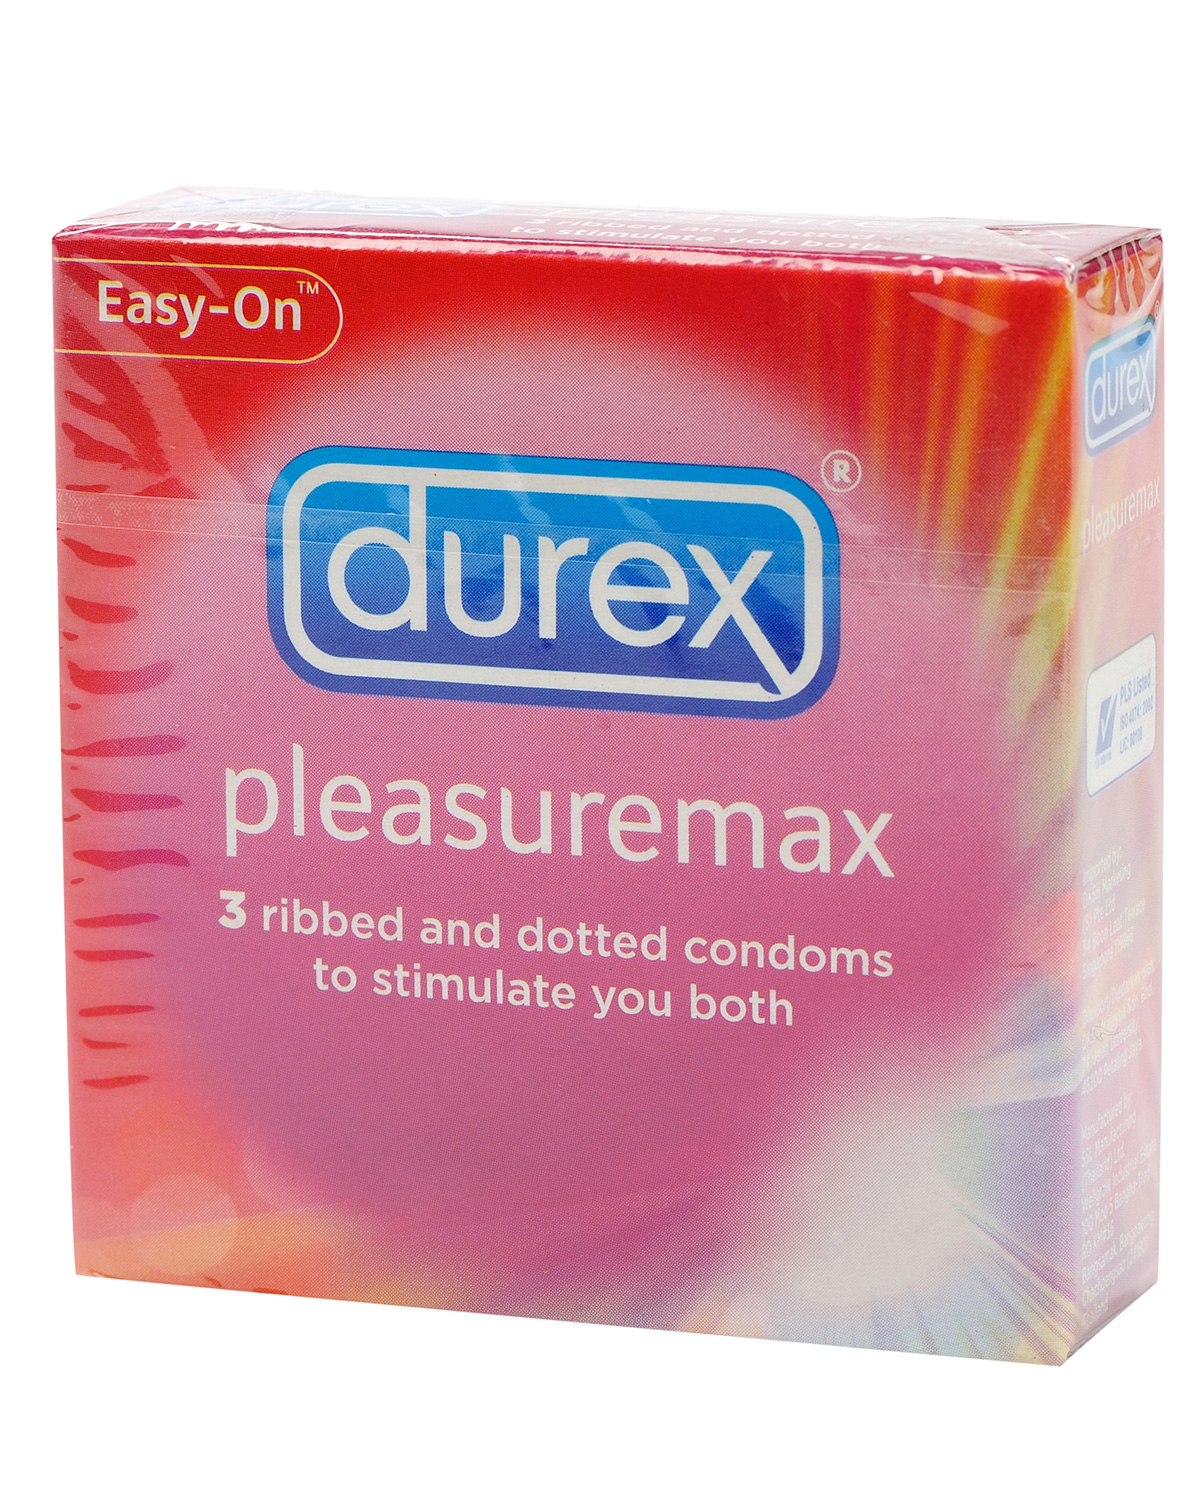 Bao cao su Durex Pleasuremax Hộp 3 Bao